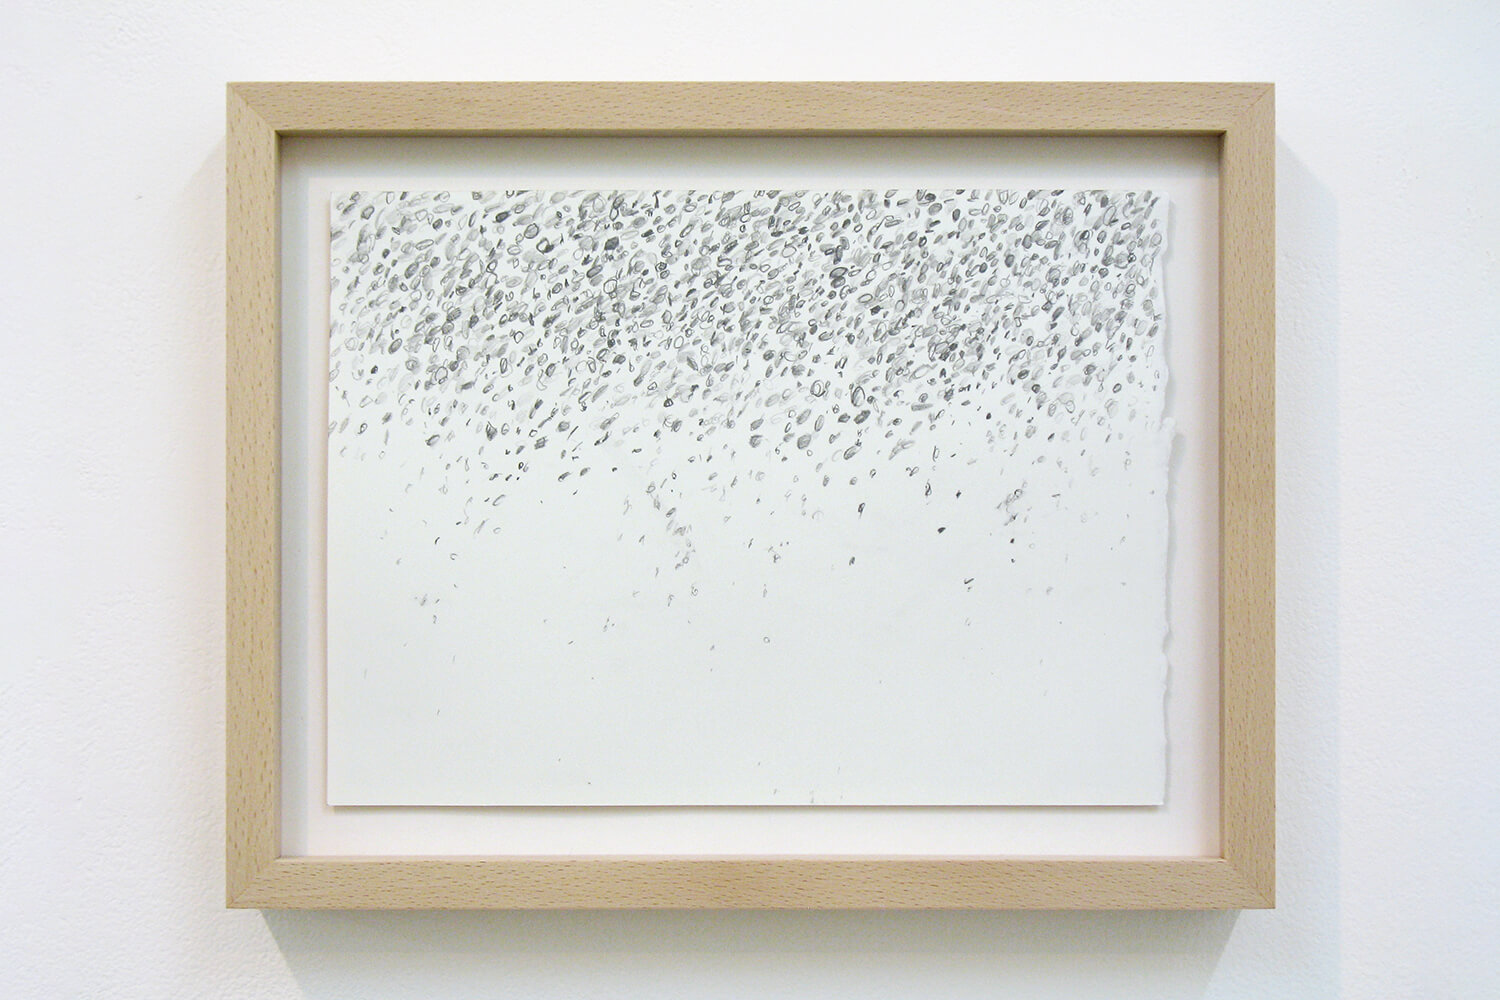 When the Dust Settles (d10)<br>Pencil on paper, 18.9 x 26 cm, 2010